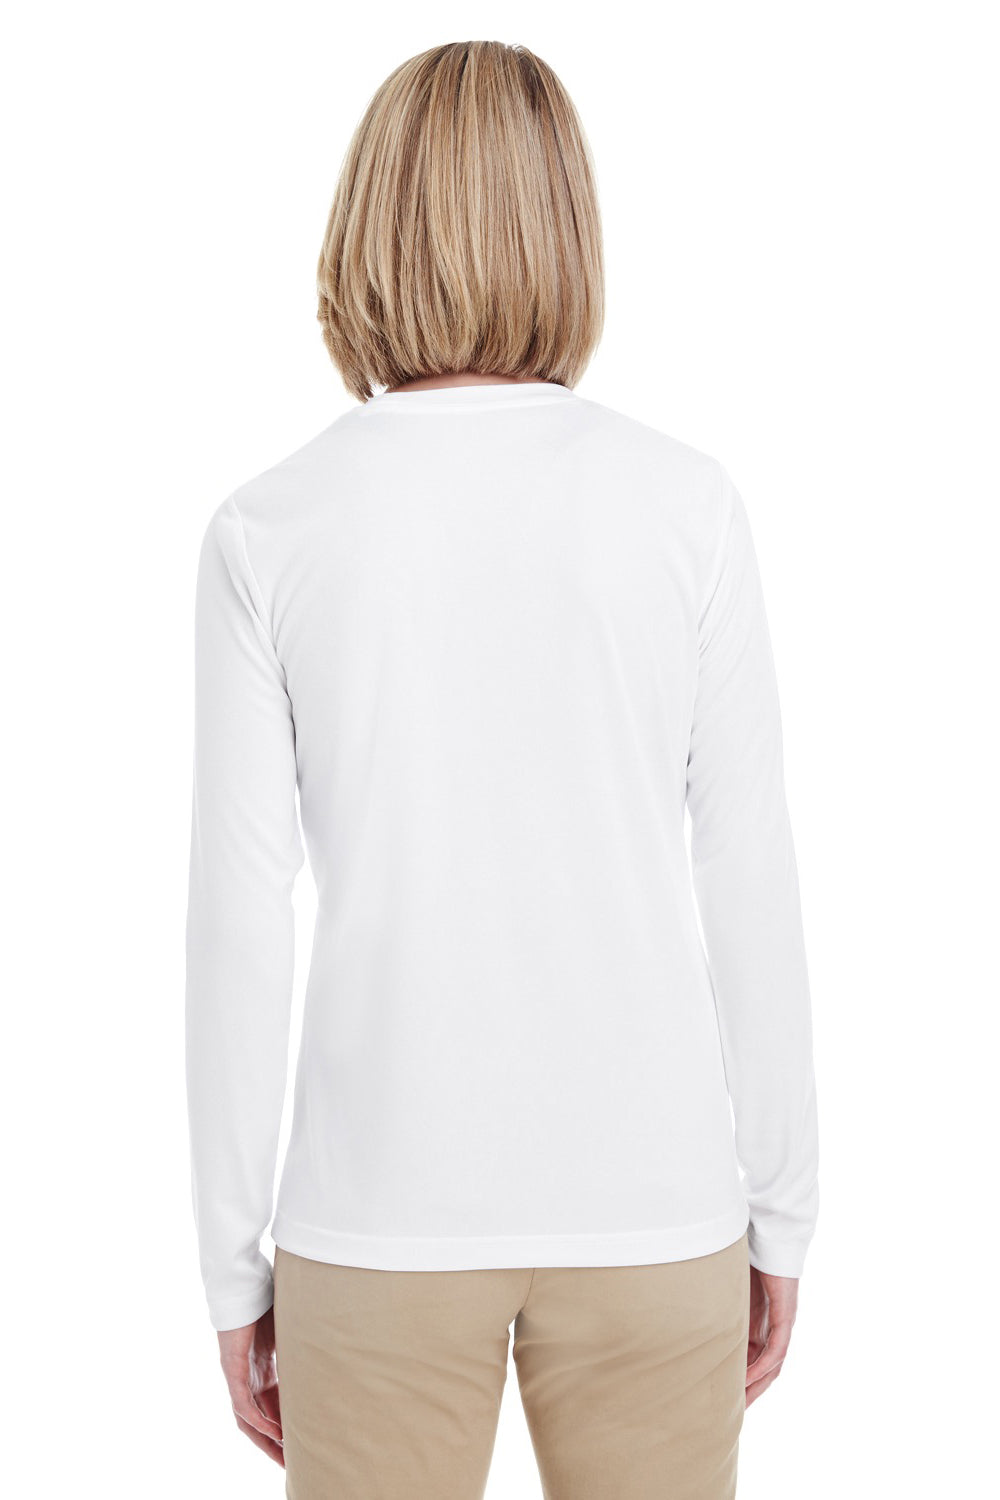 UltraClub 8622W Womens Cool & Dry Performance Moisture Wicking Long Sleeve Crewneck T-Shirt White Back